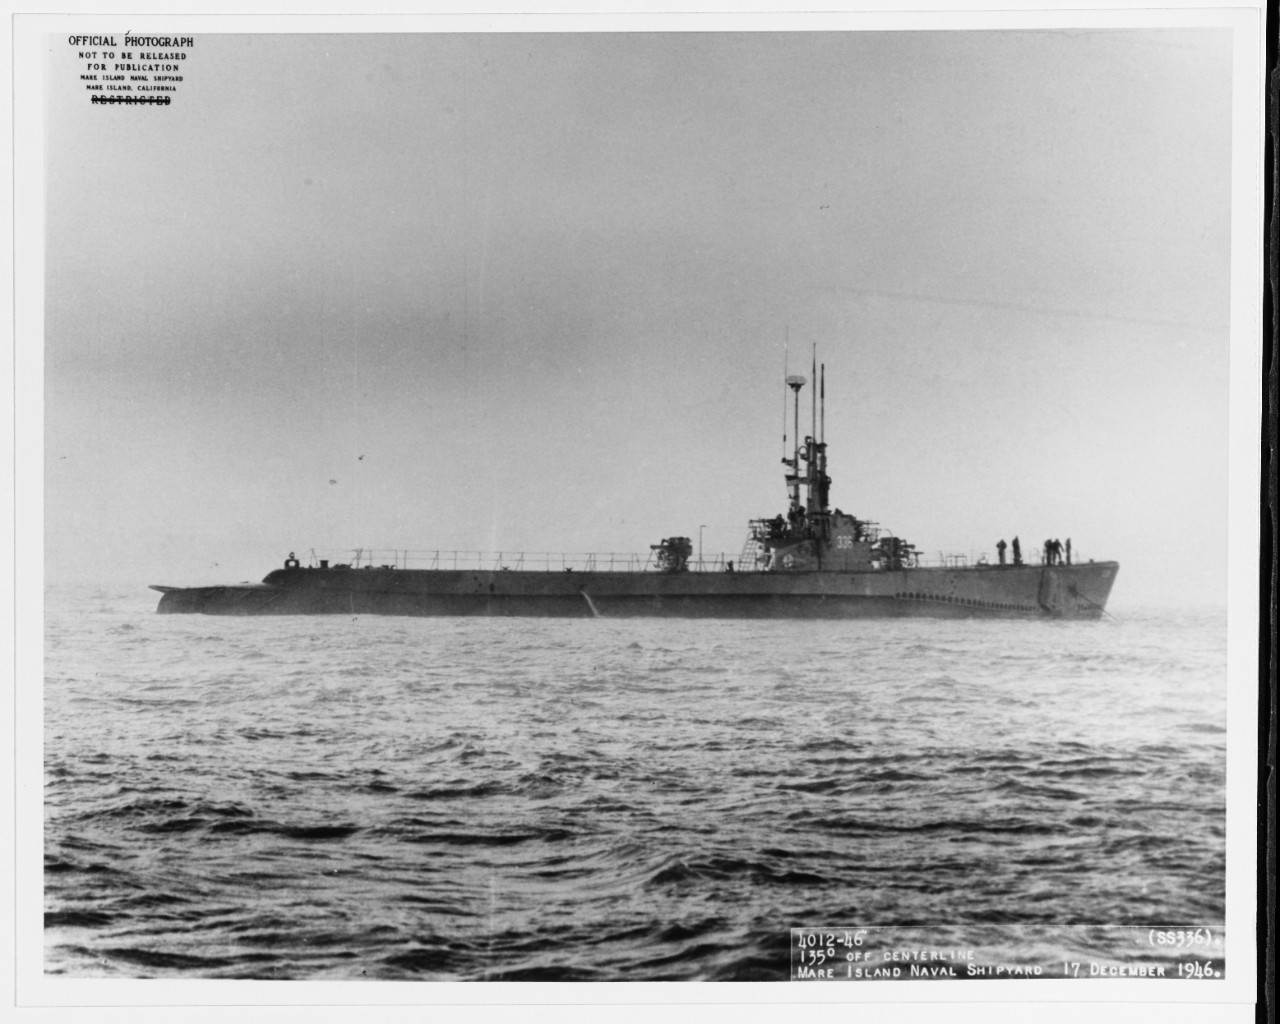 USS CAPITAINE (SS-336)